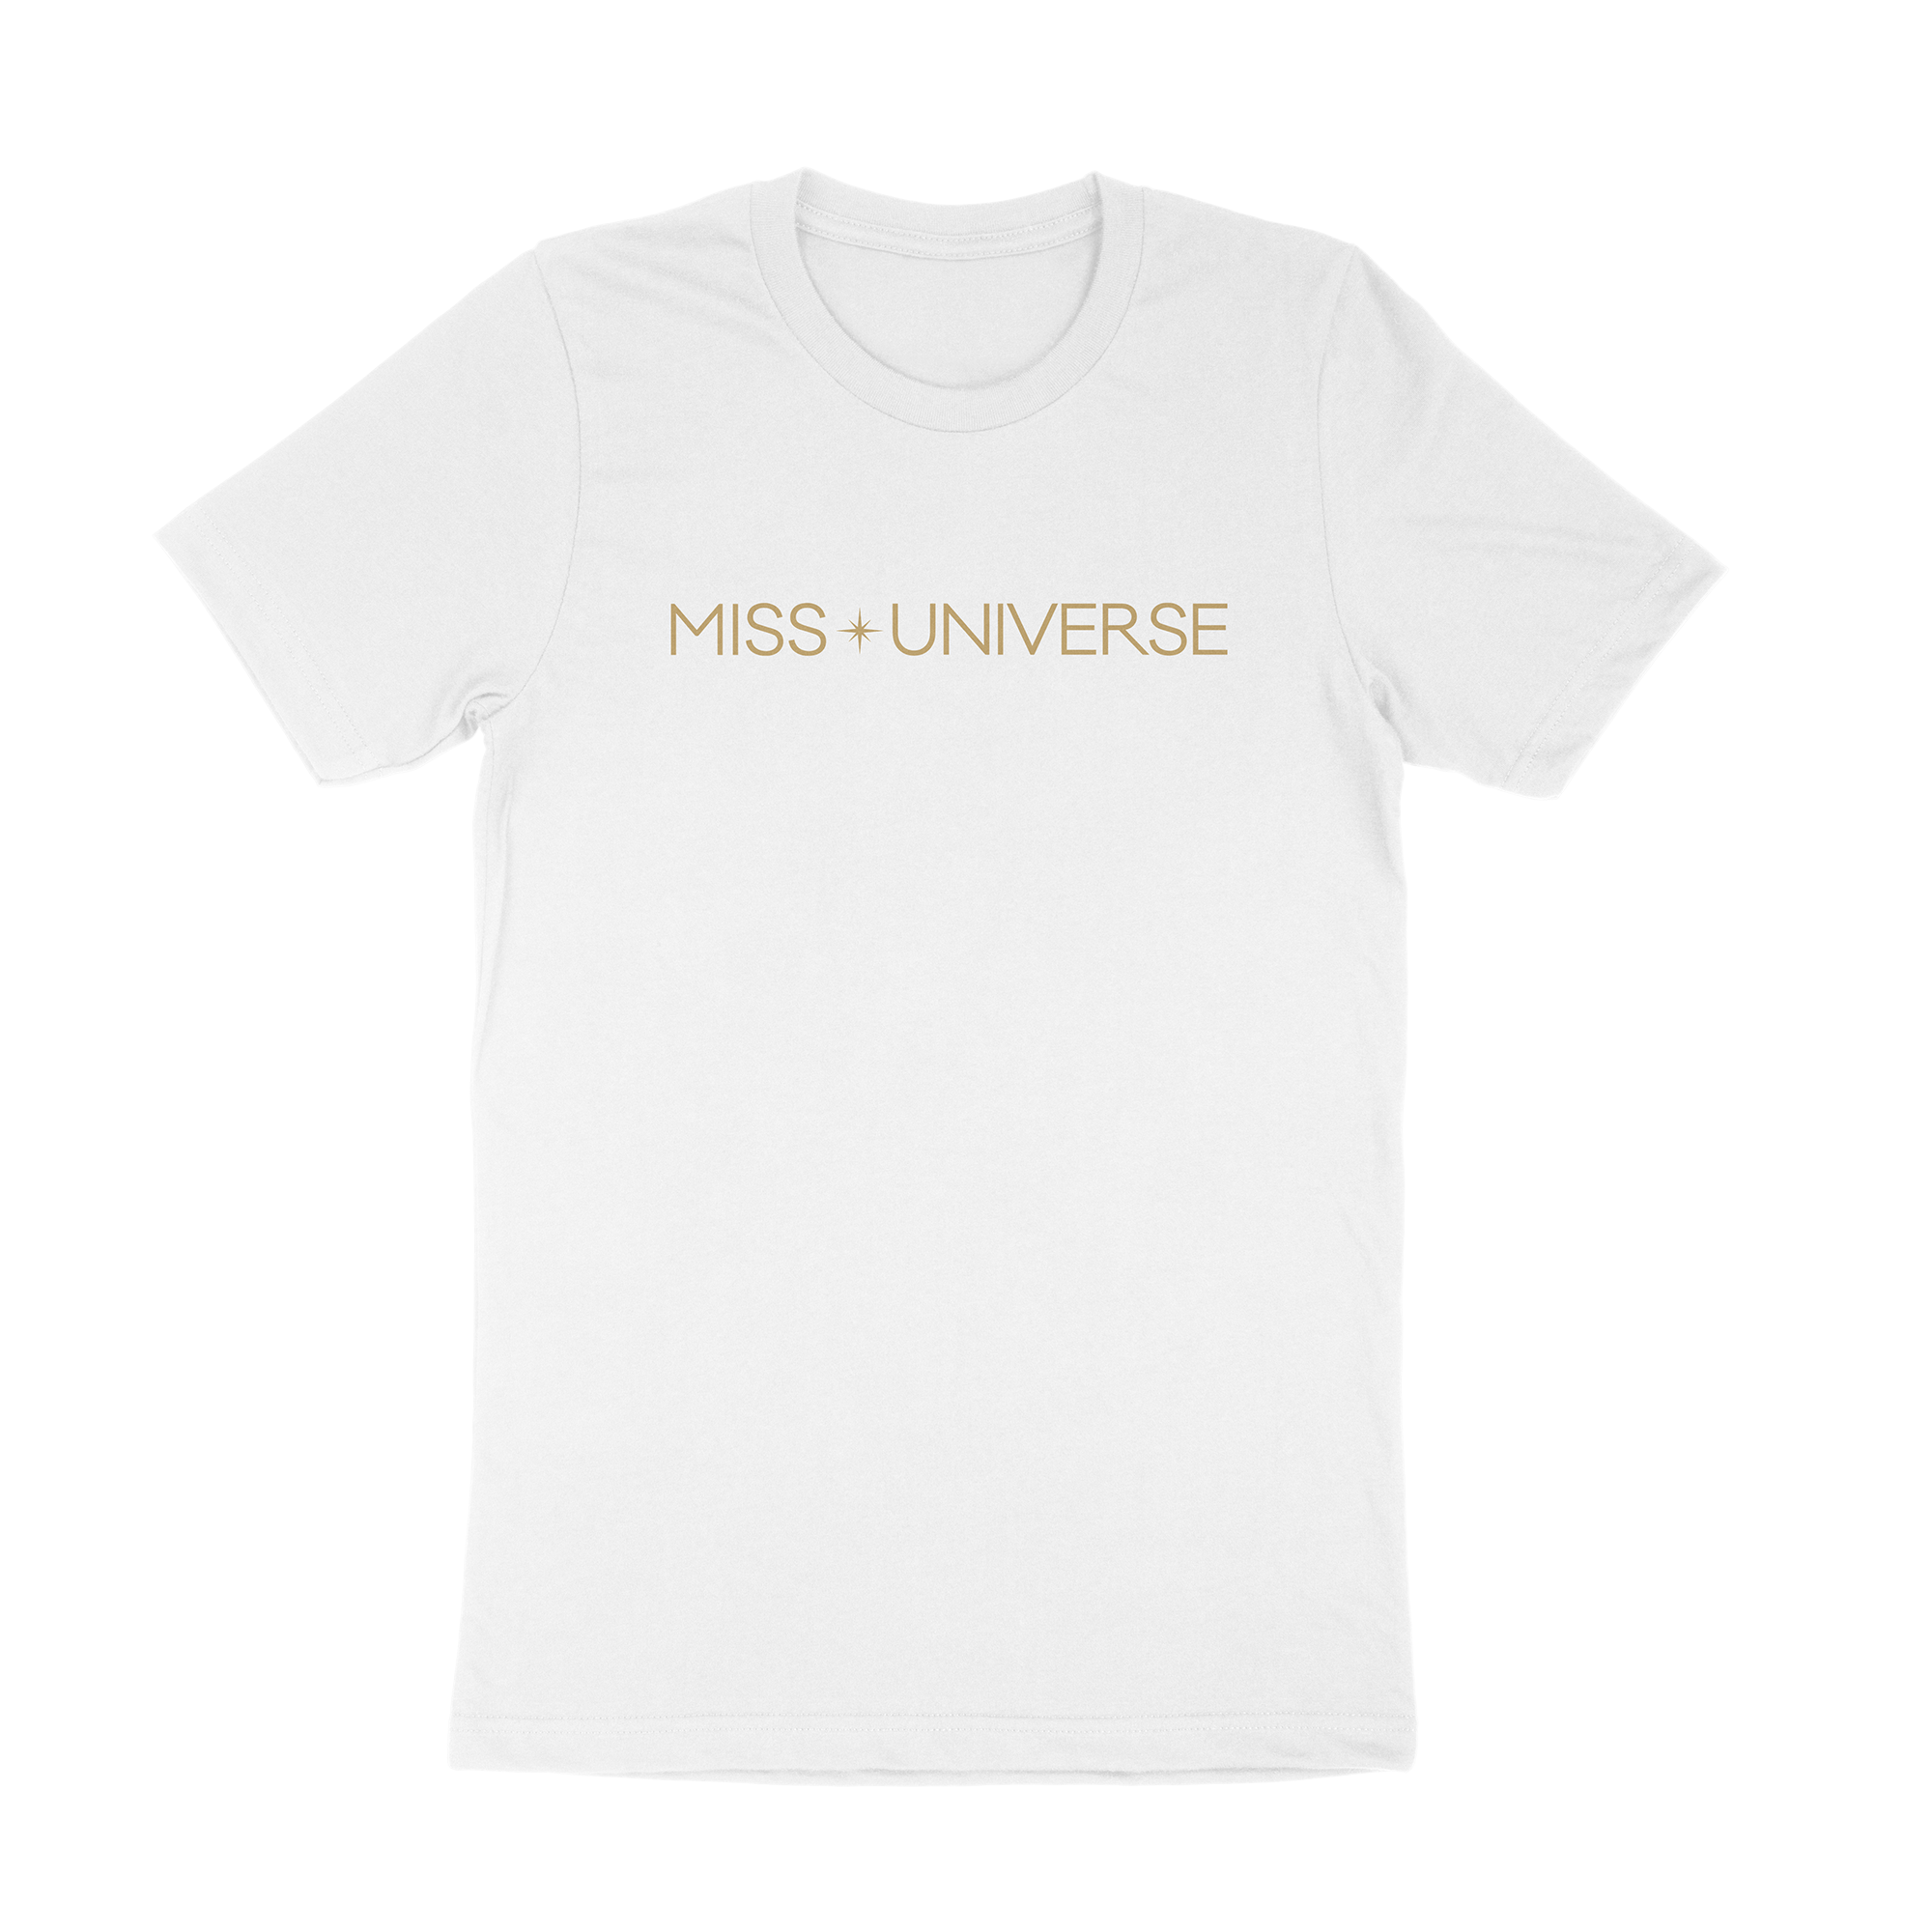 Miss Universe Tee - White